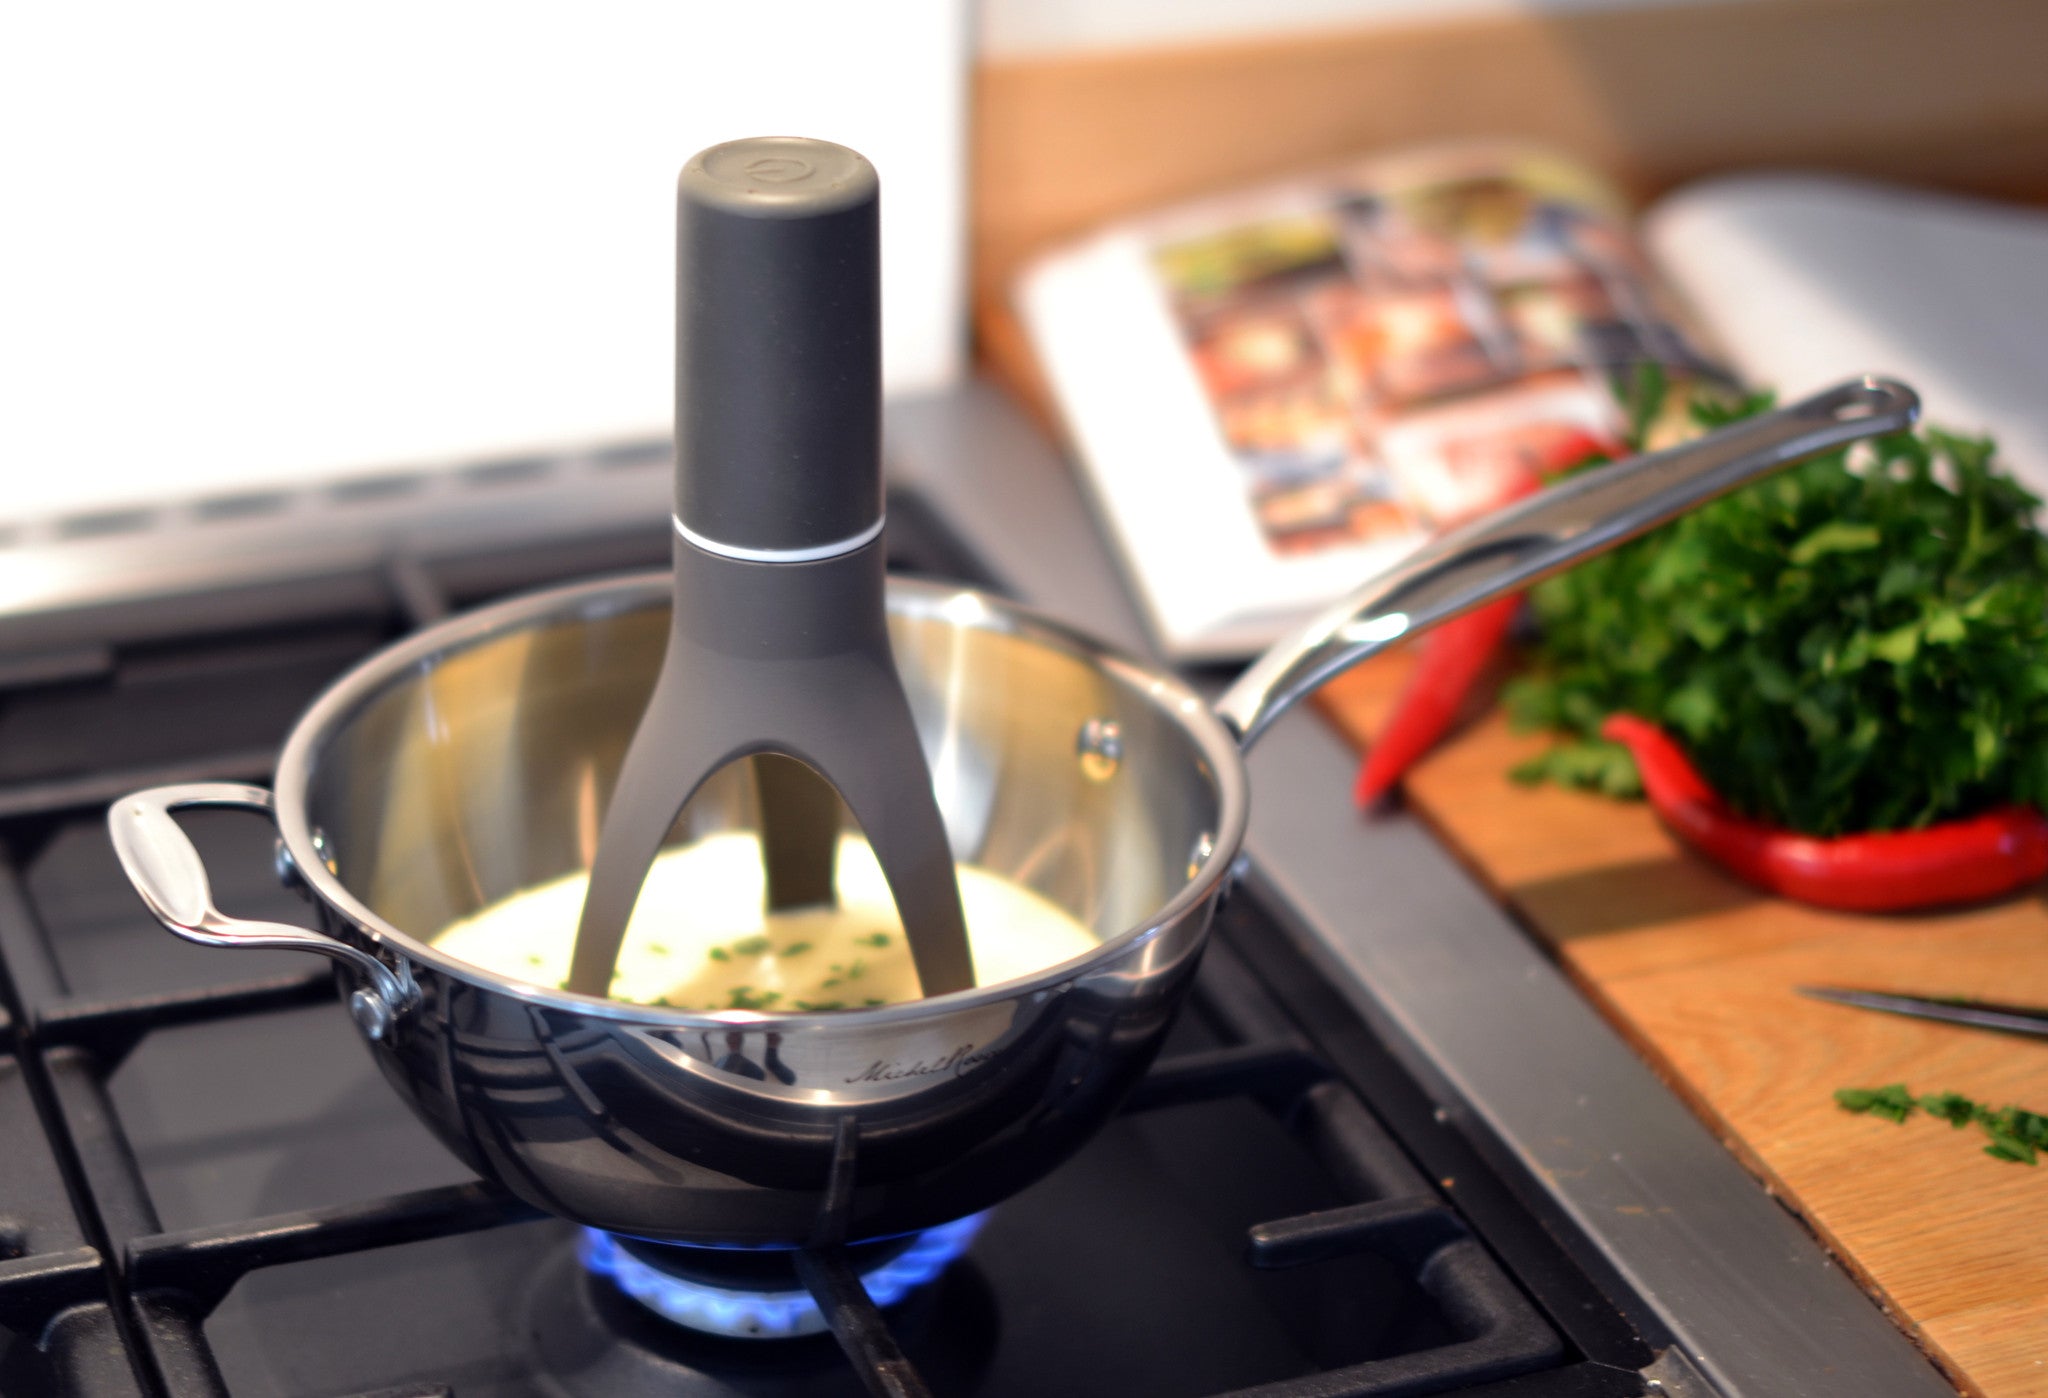  Uutensil StirrTime, Automatic Pan Stirrer with Timer, Light  Gray & Gray: Home & Kitchen